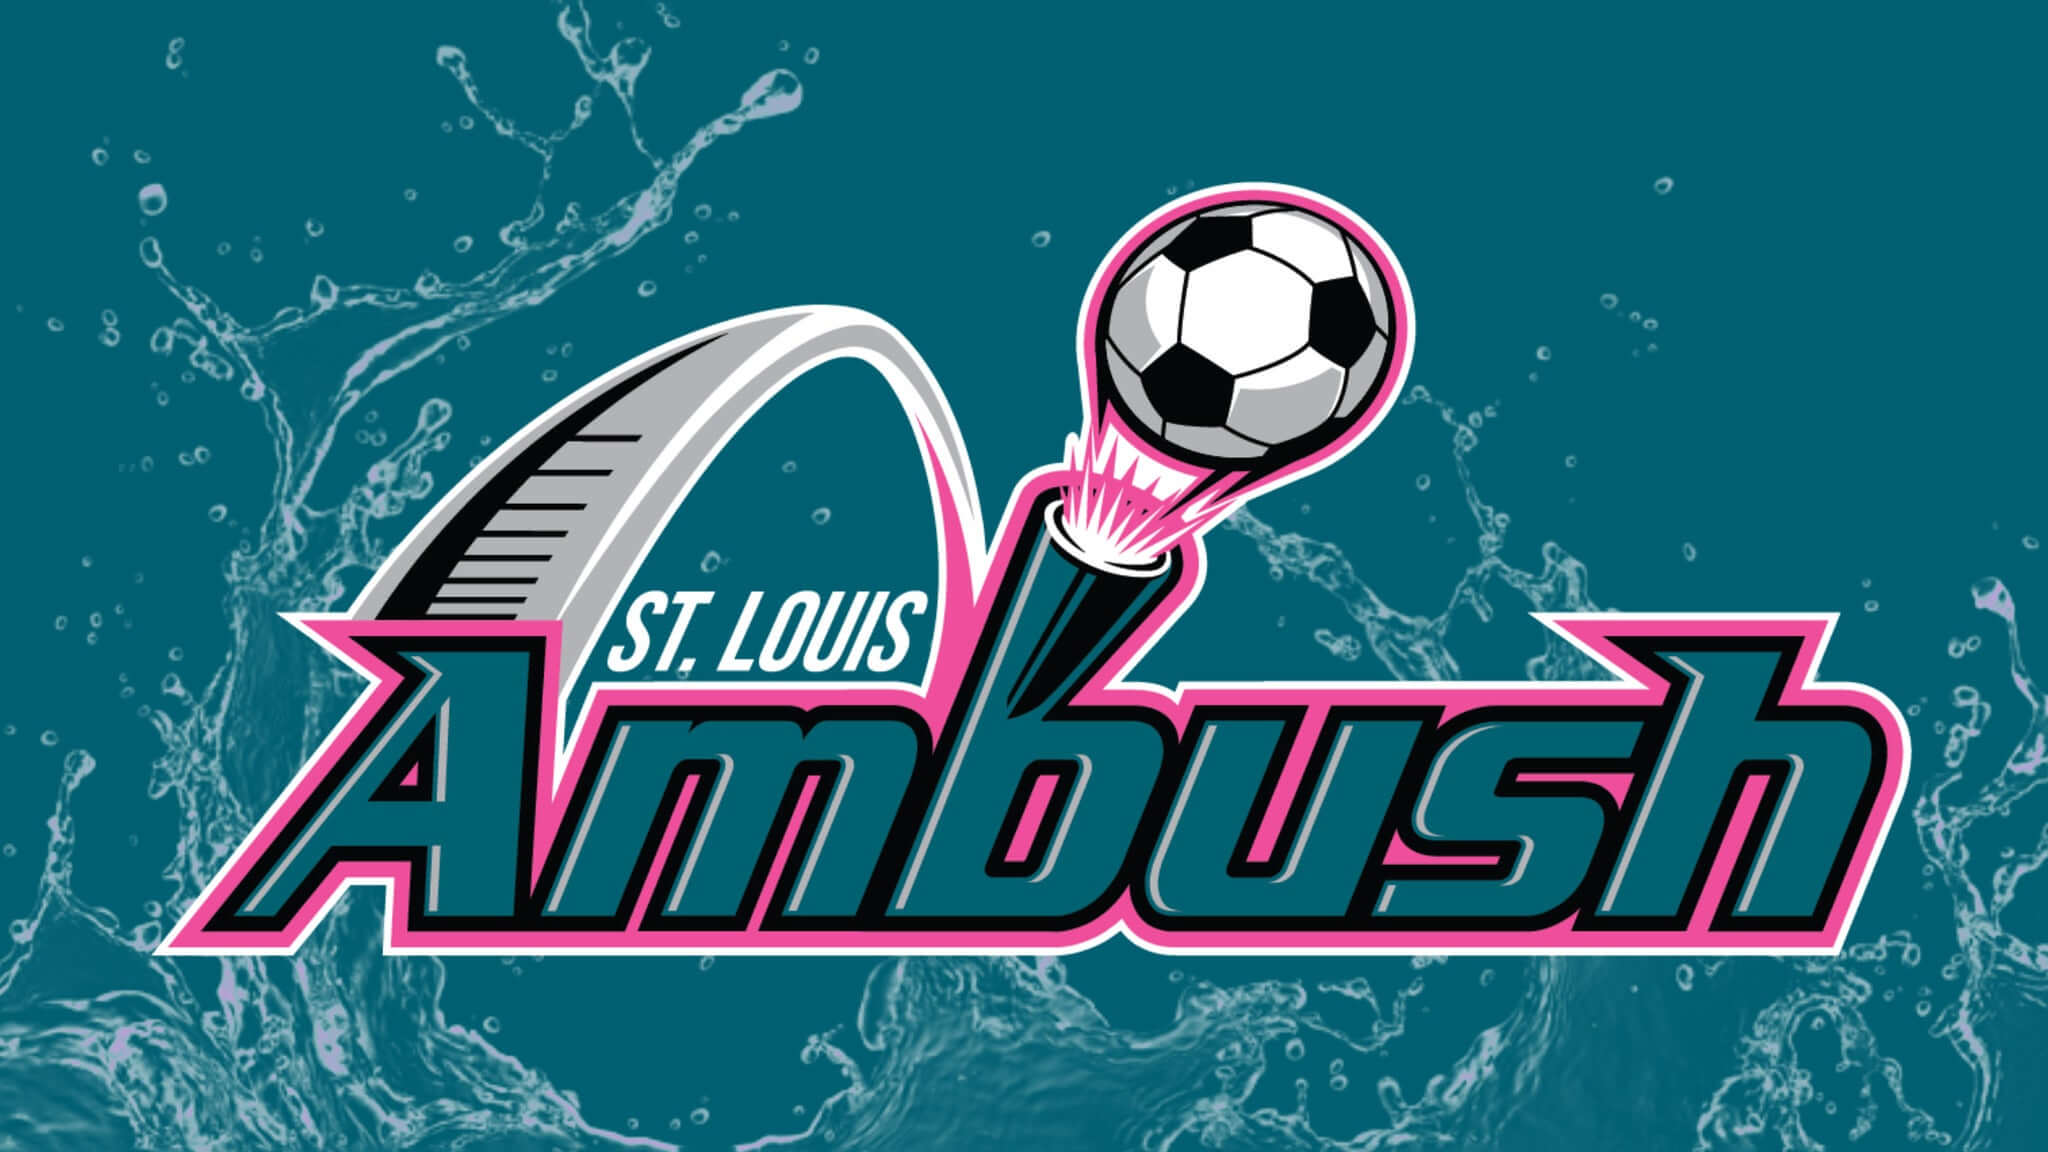 Indoor Soccer | Voucher giveaway with St. Louis Ambush!